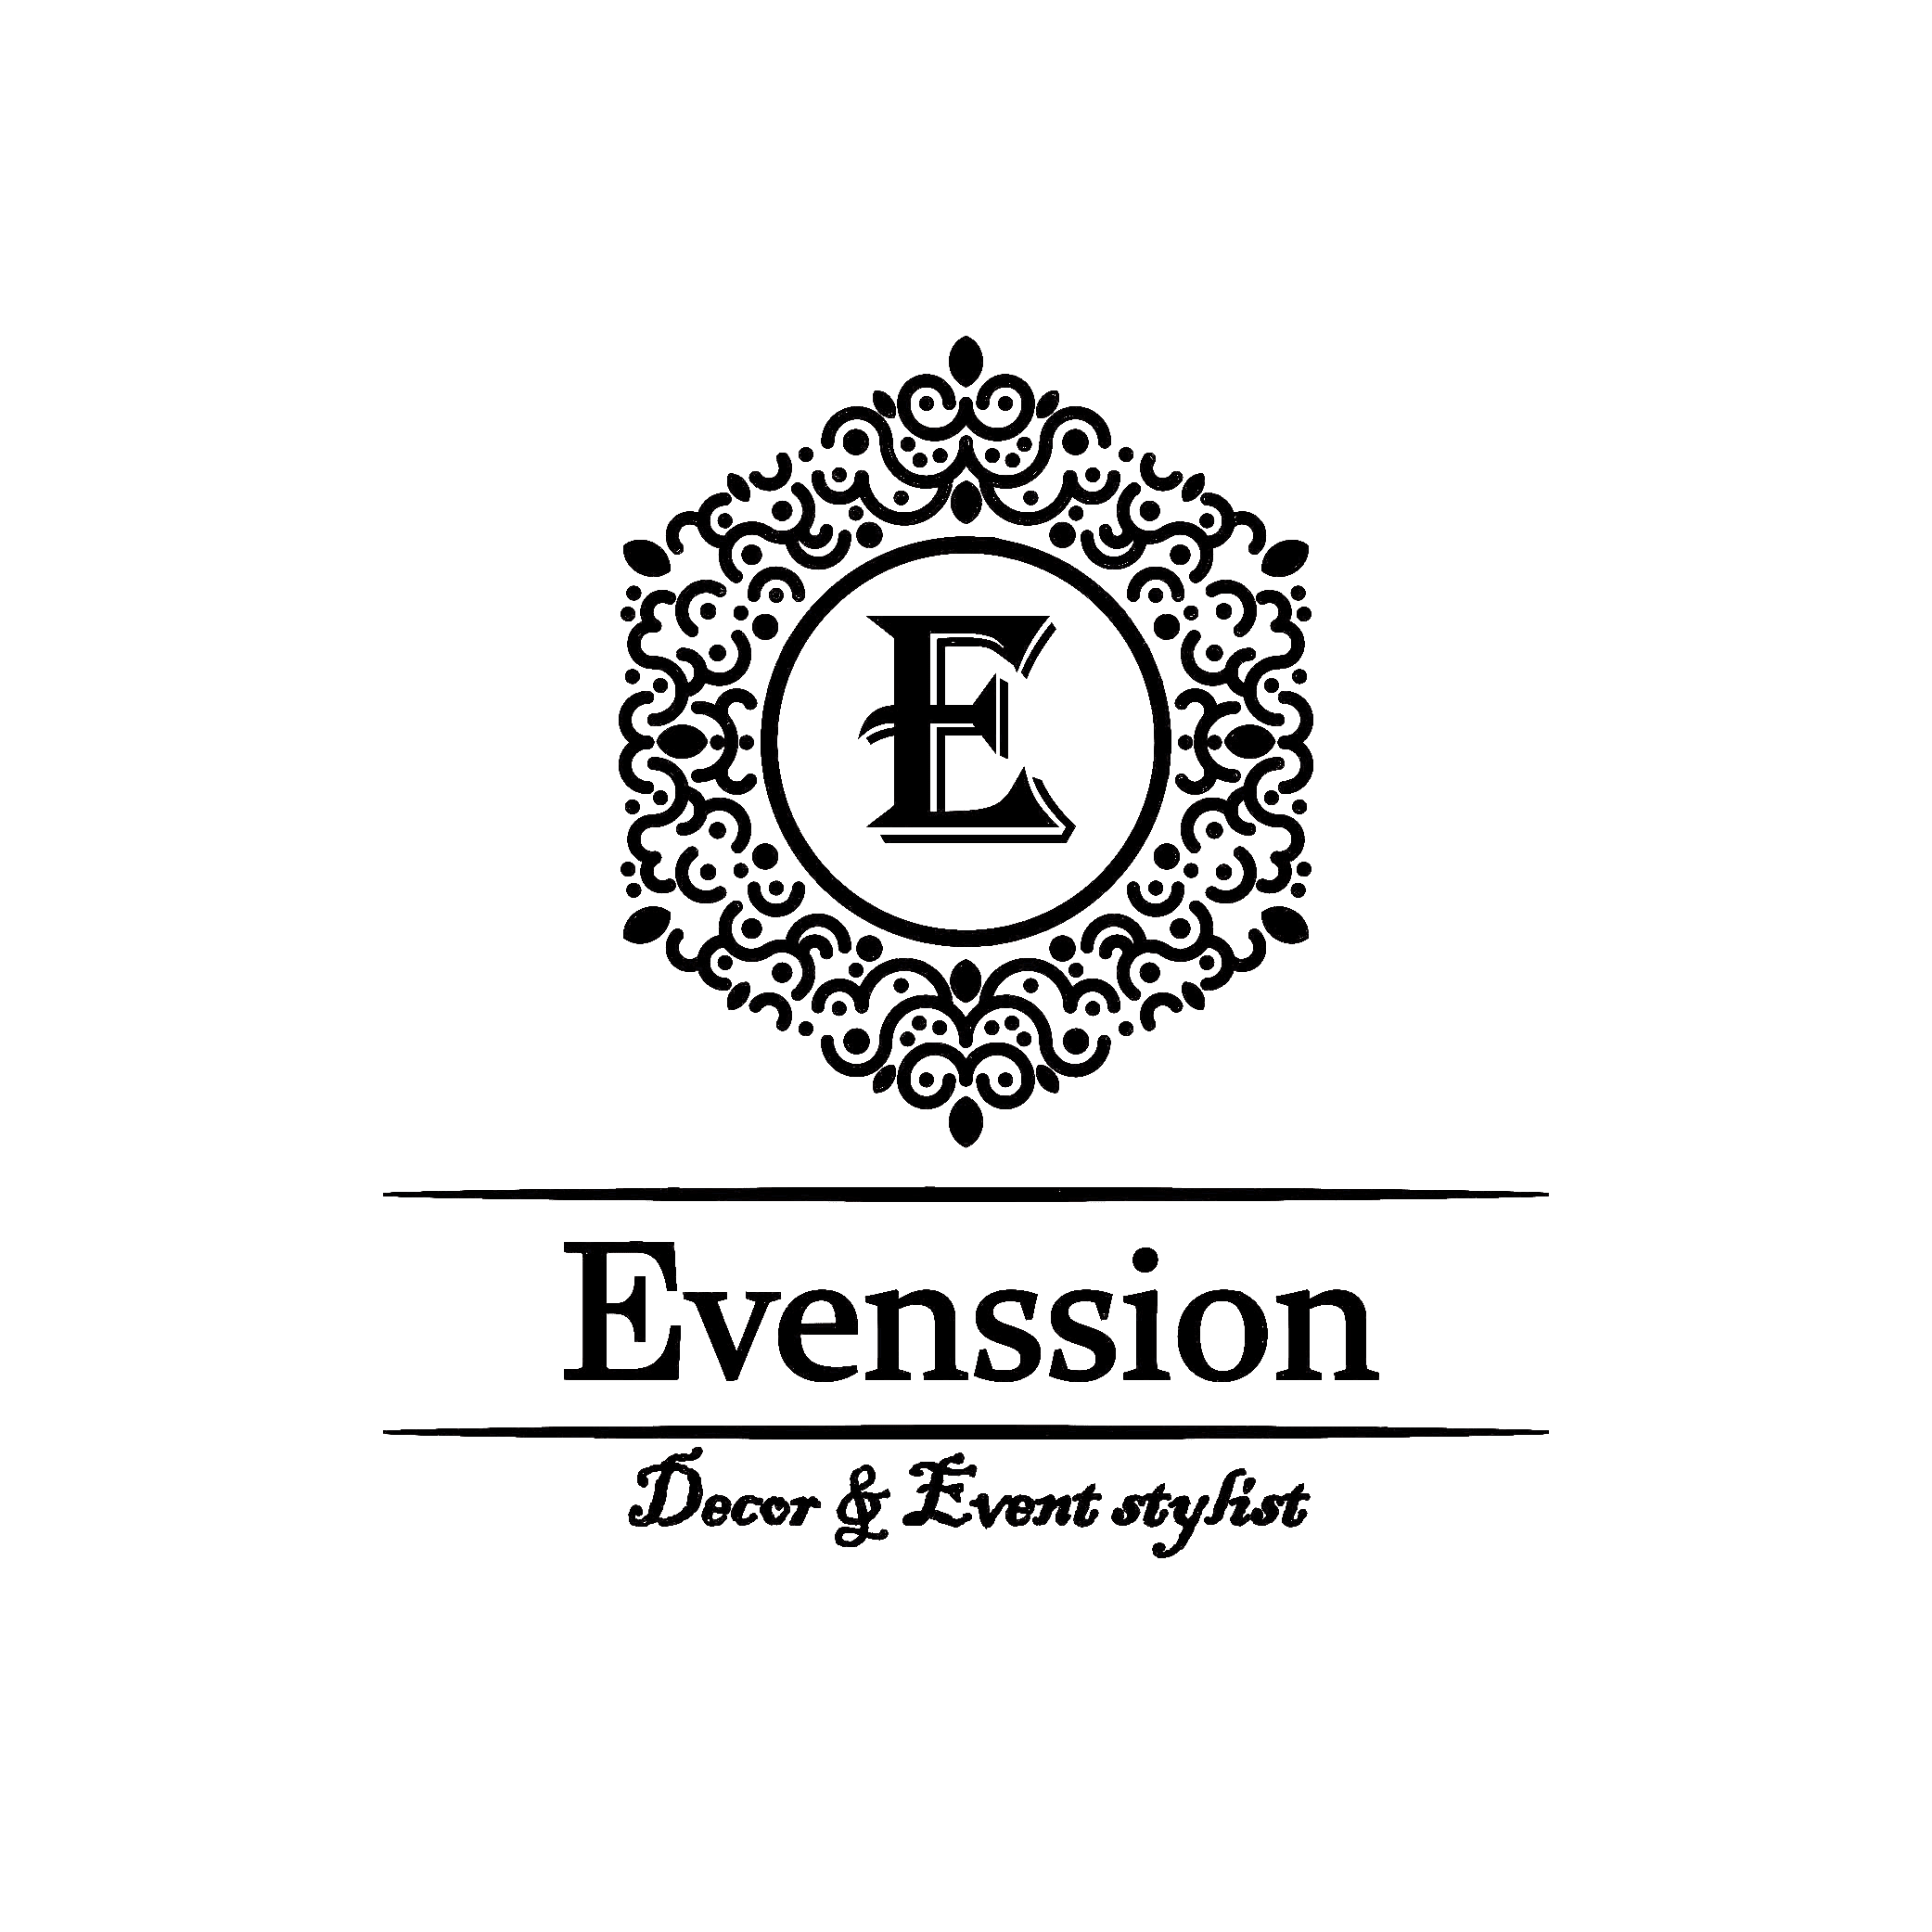 Evenssion